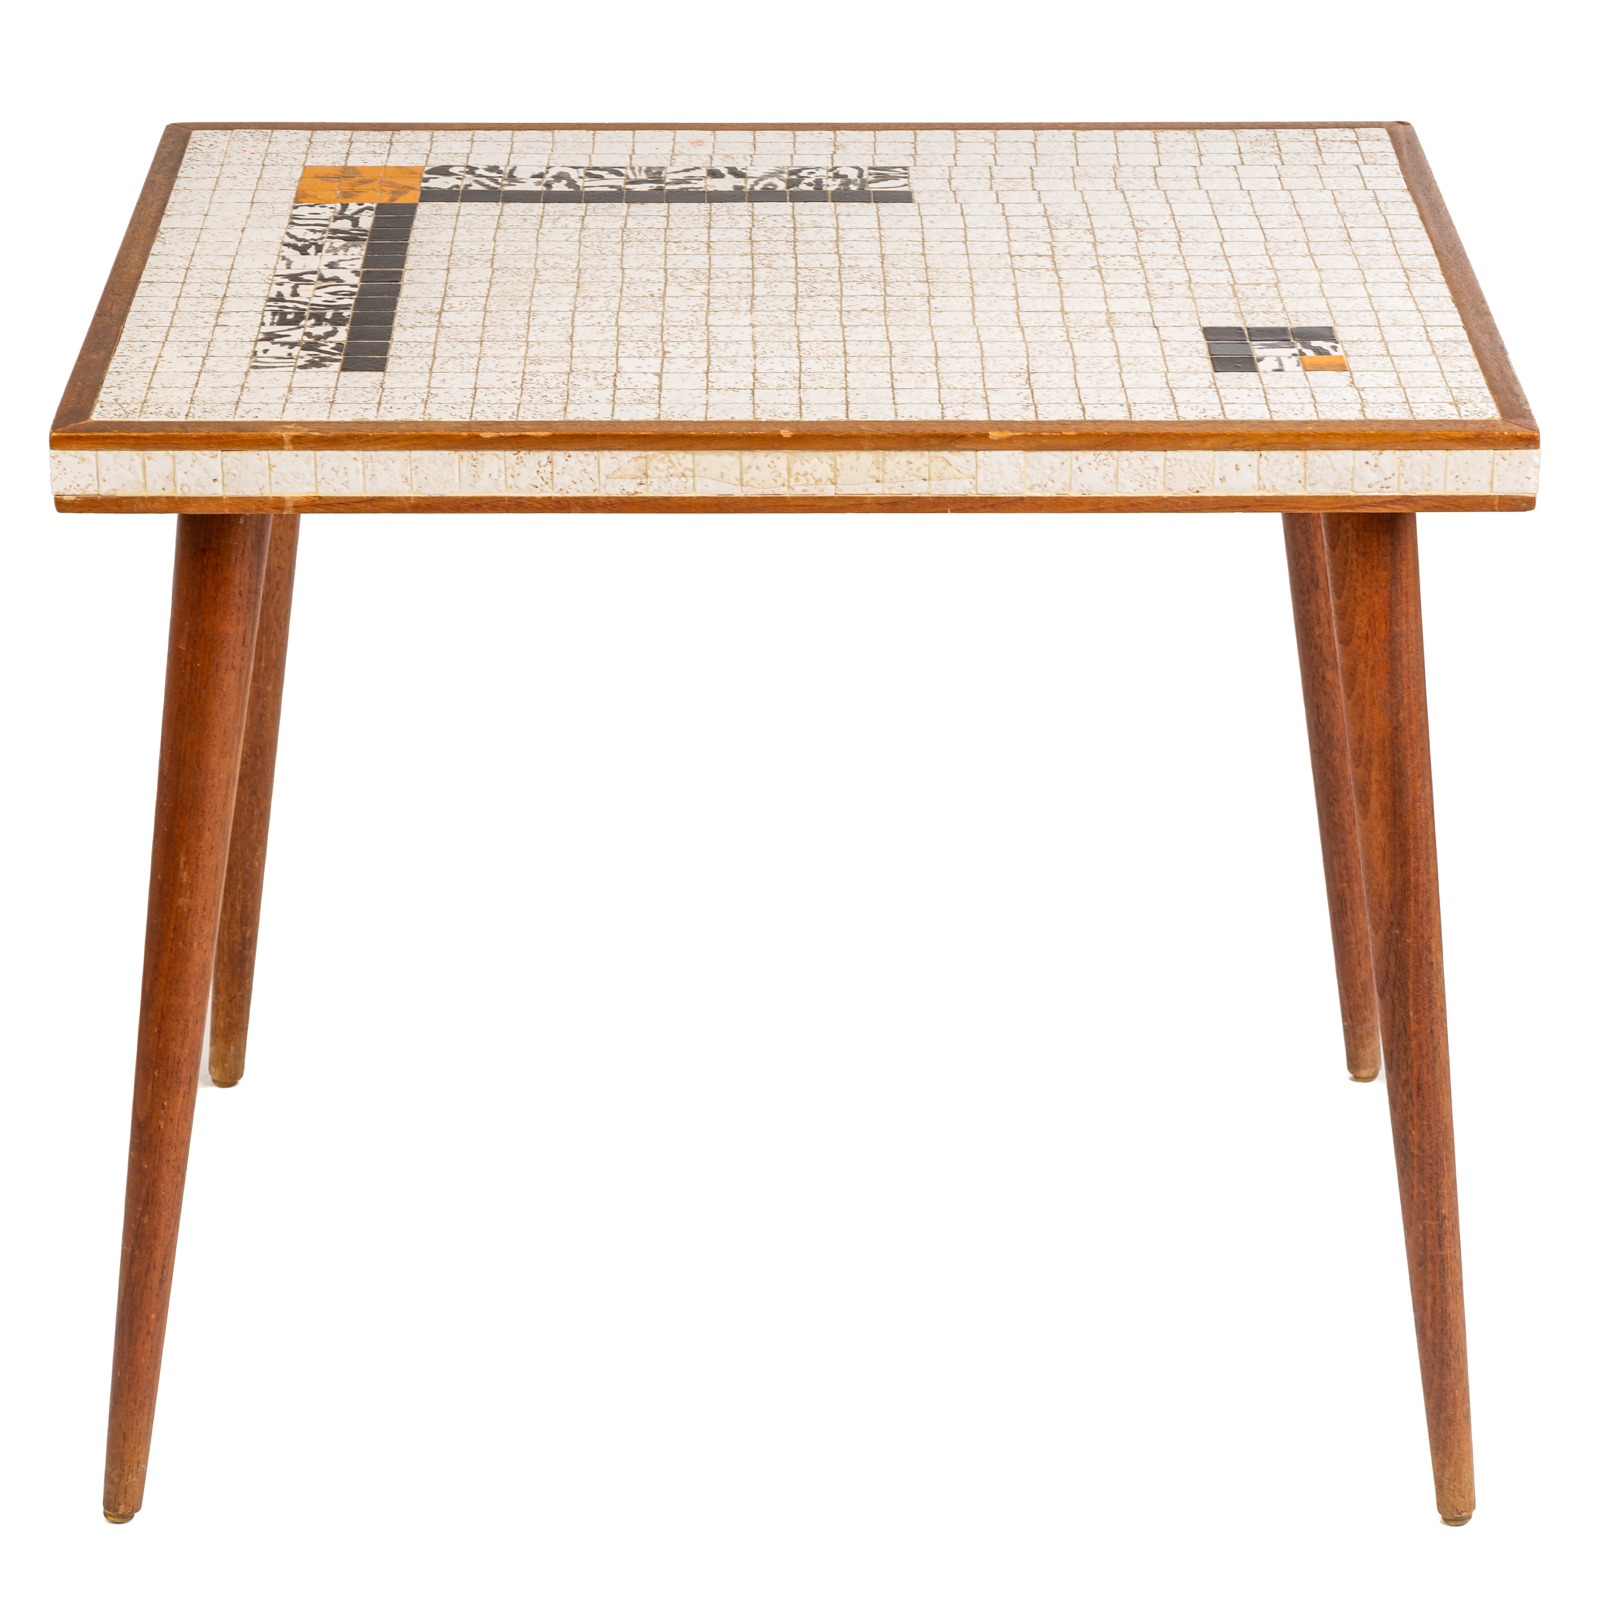 MID-CENTURY MODERN MOSAIC TOP TABLE